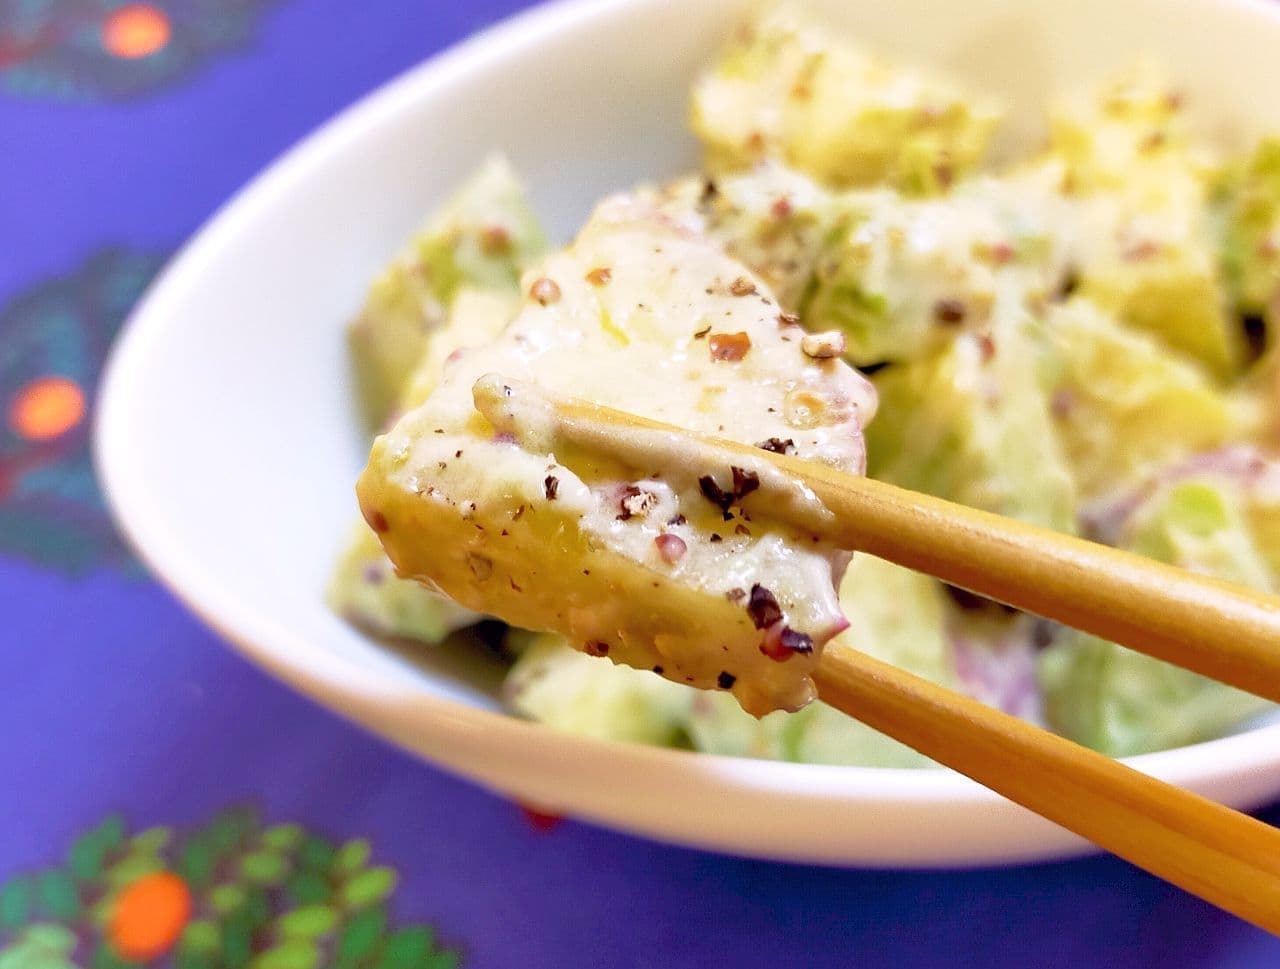 "Sweet potato and avocado salad" recipe